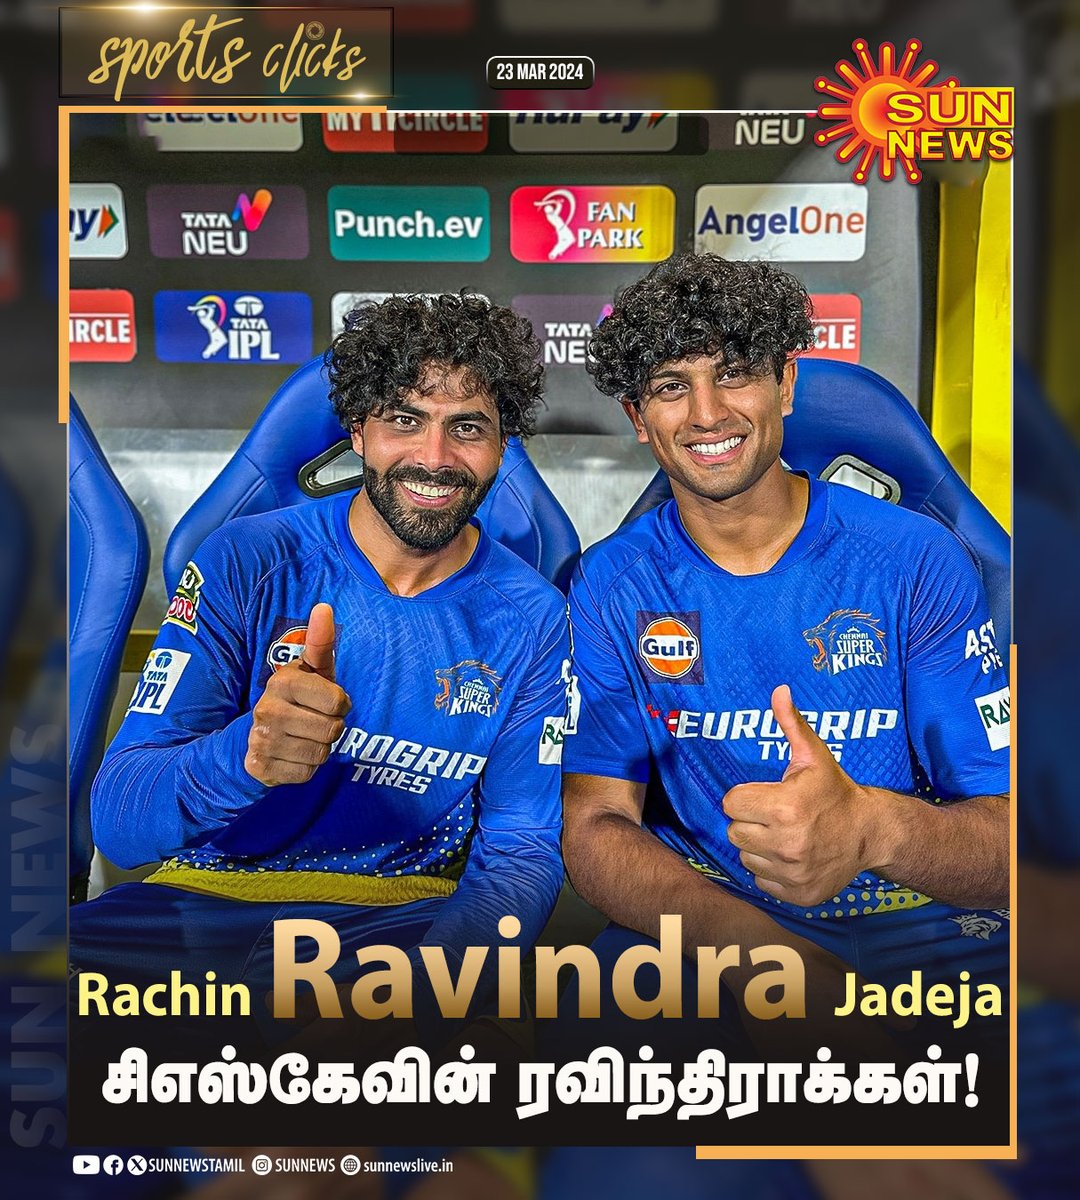 #SportsClicks | சிஎஸ்கே வீரர்கள் ரச்சின் ரவிந்திரா மற்றும் ரவீந்திர ஜடேஜா!

#SunNews | #CSKvsRCB | #RachinRavindra | #Jadeja